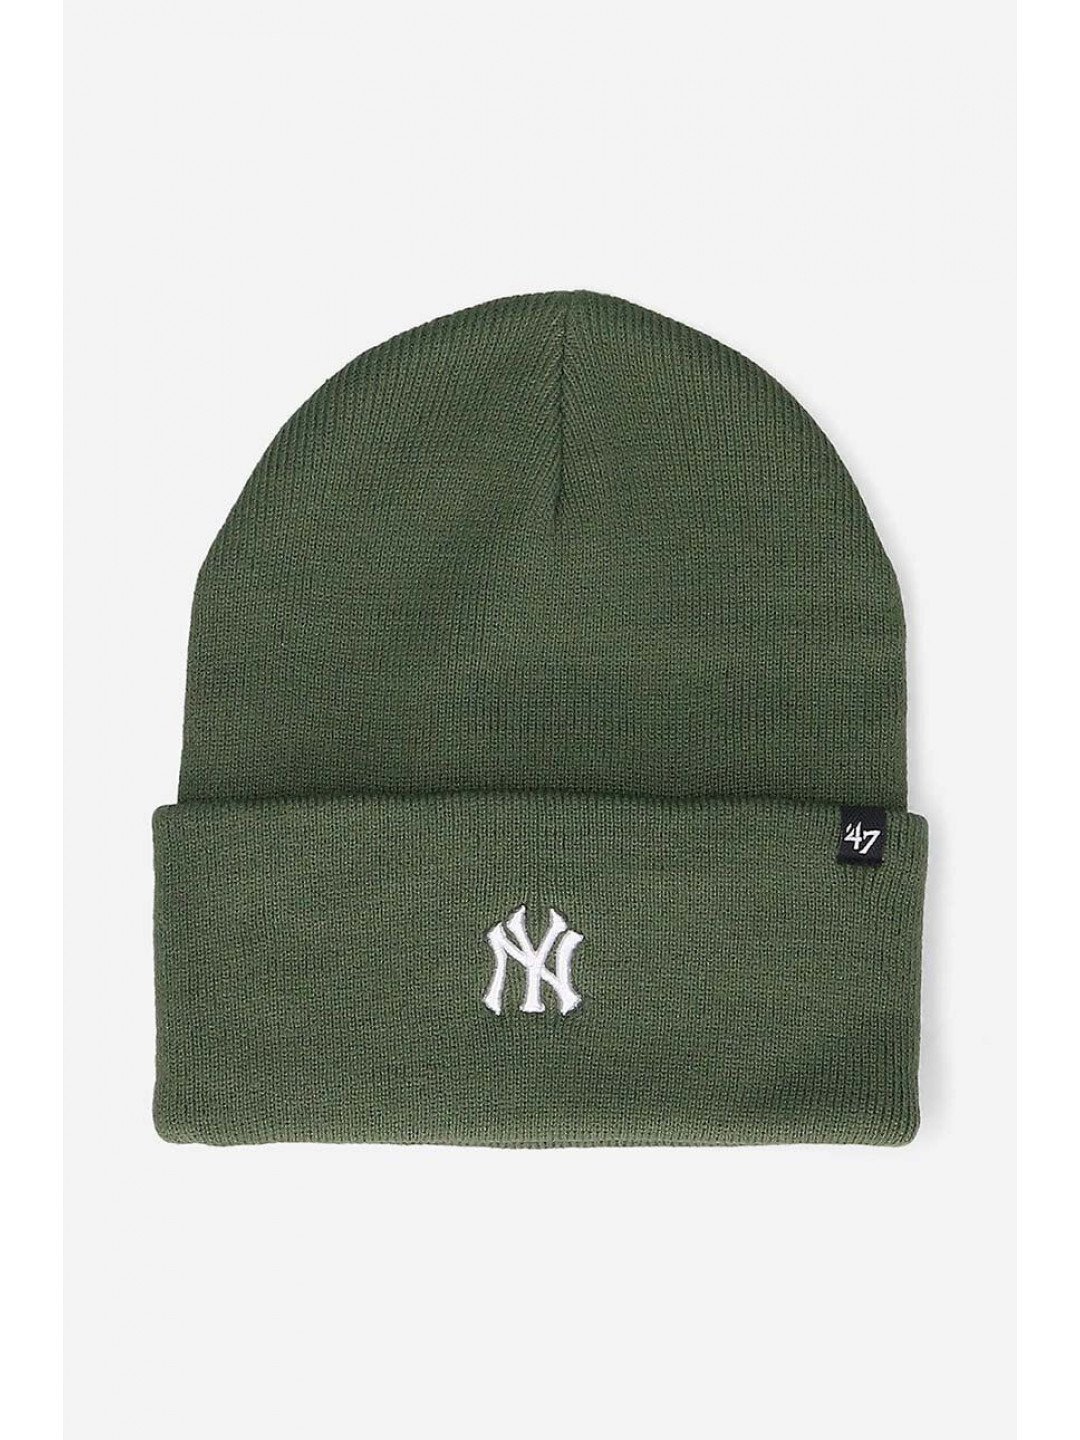 Čepice 47brand New York Yankees Moss Base zelená barva